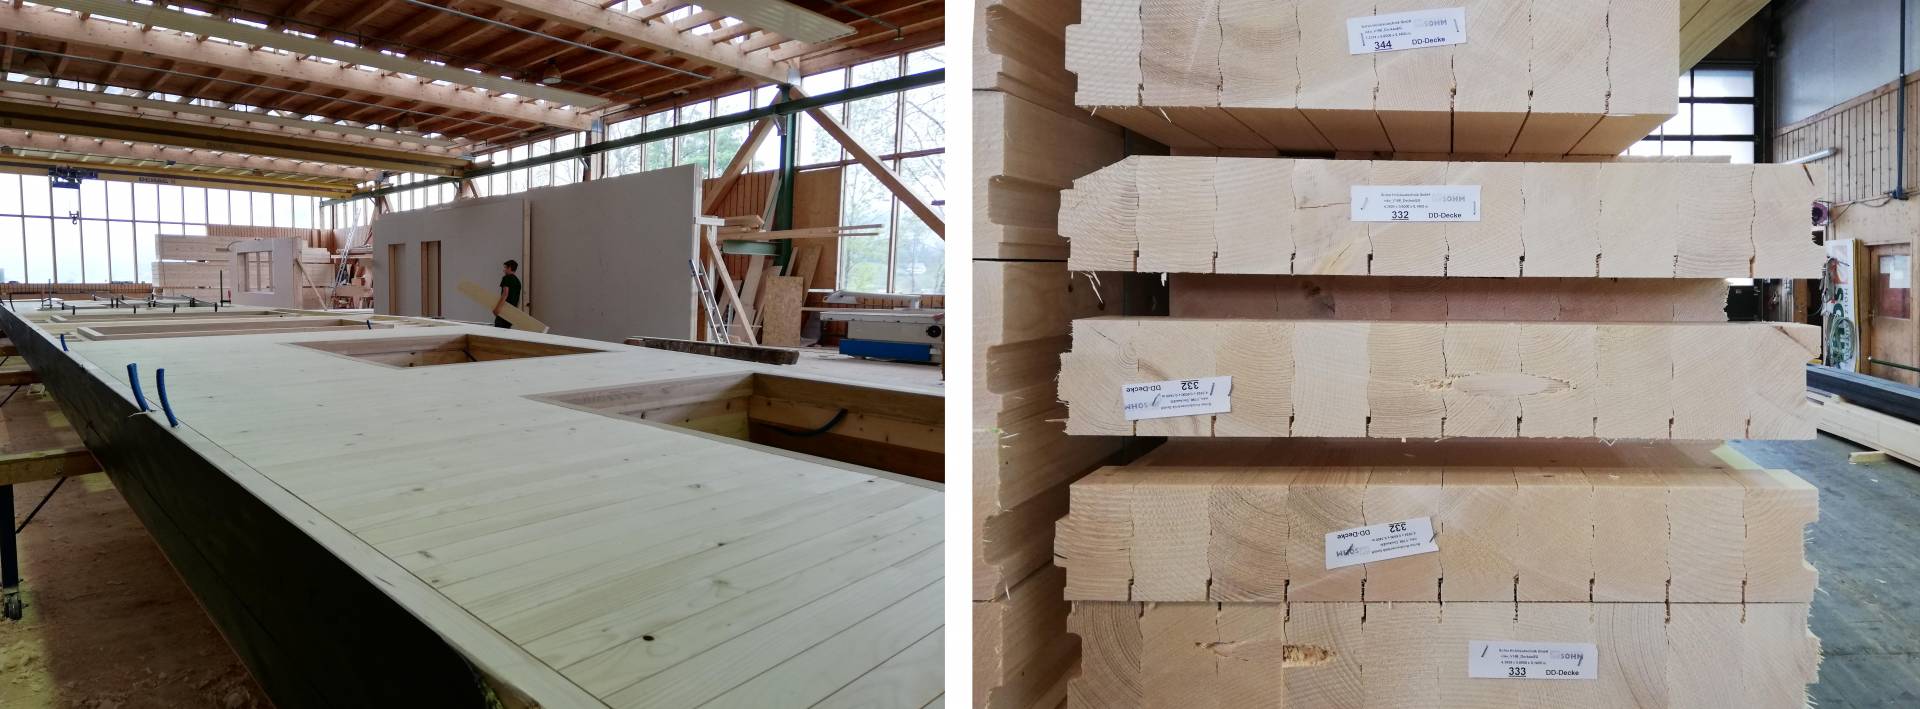 Holzbau innovativ: Vollholzelemente mit Diagonaldübel-Holz